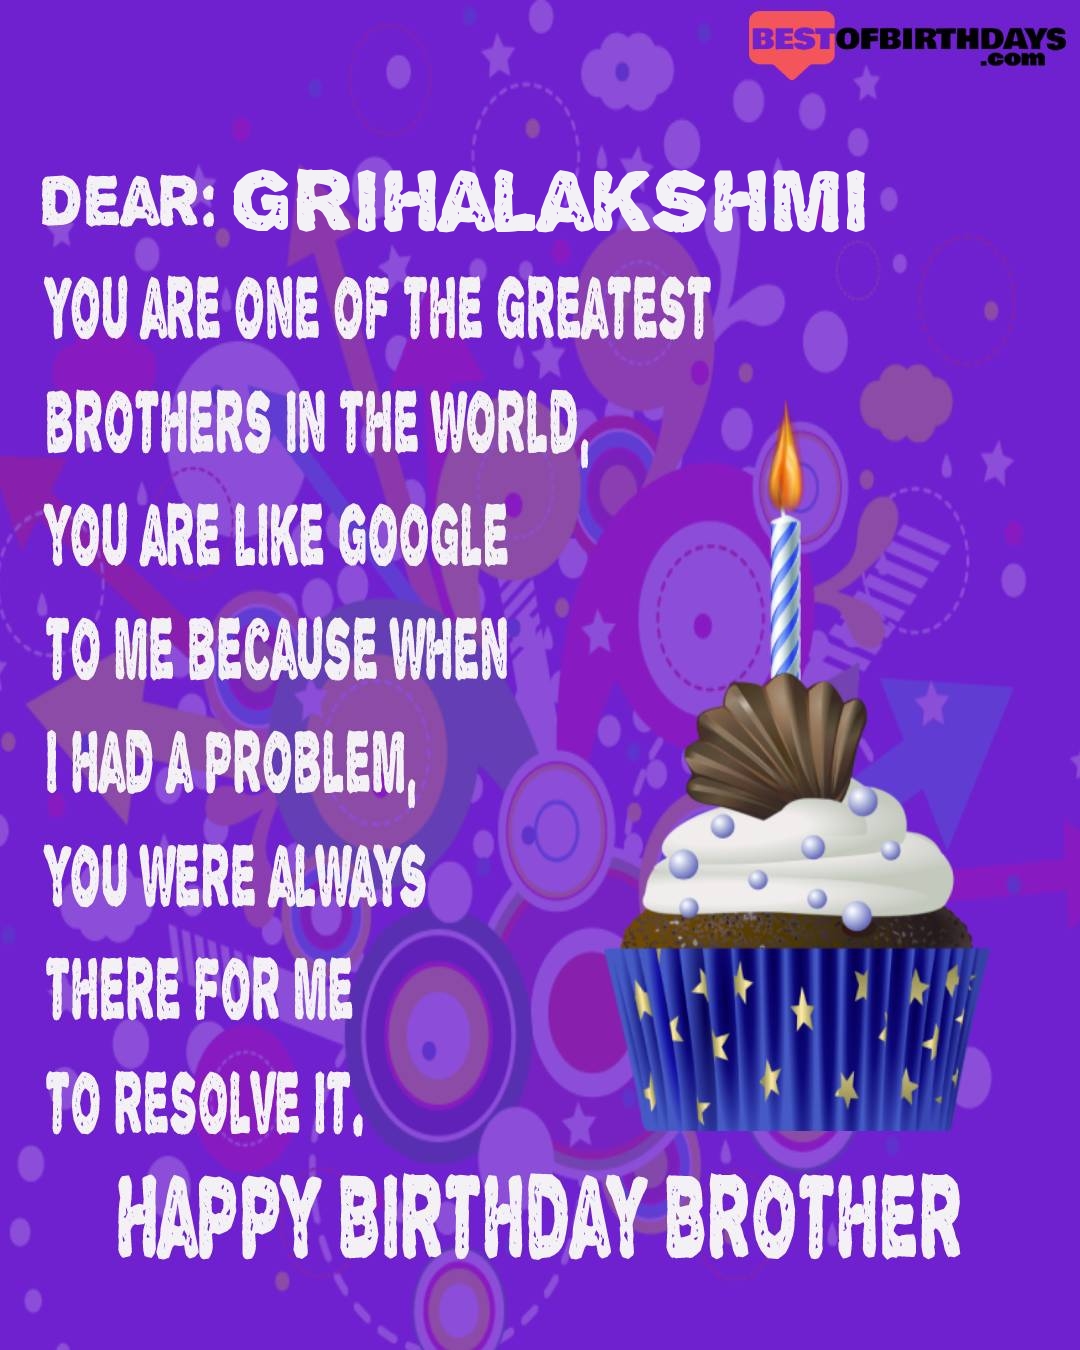 Happy birthday grihalakshmi bhai brother bro